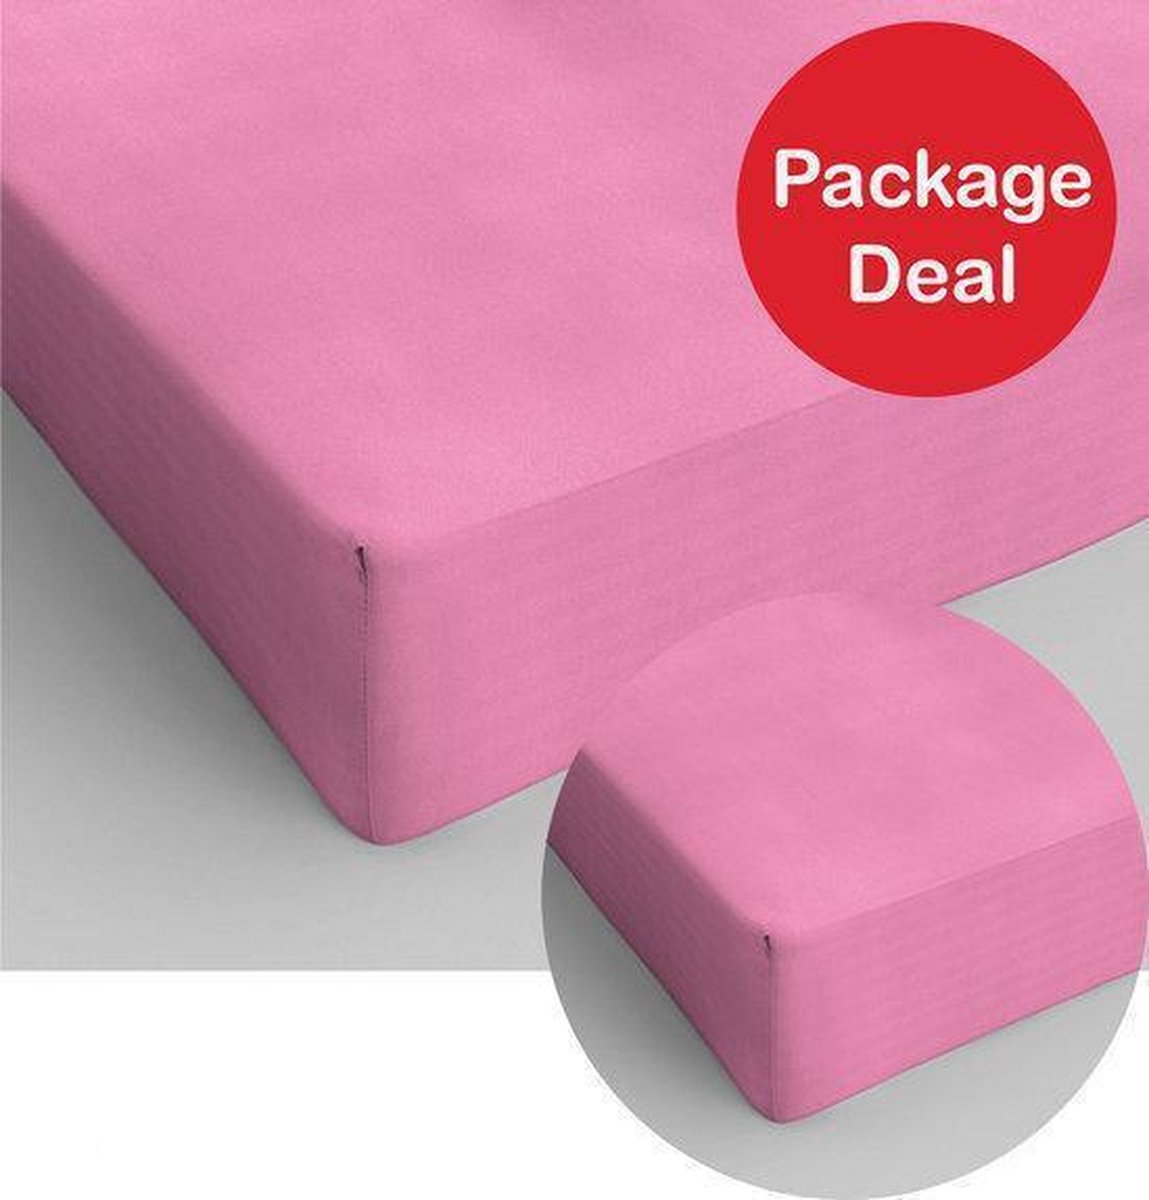 Package Deal 2x Dreamhouse Bedding Hoeslaken Katoen 160x200 - Roze